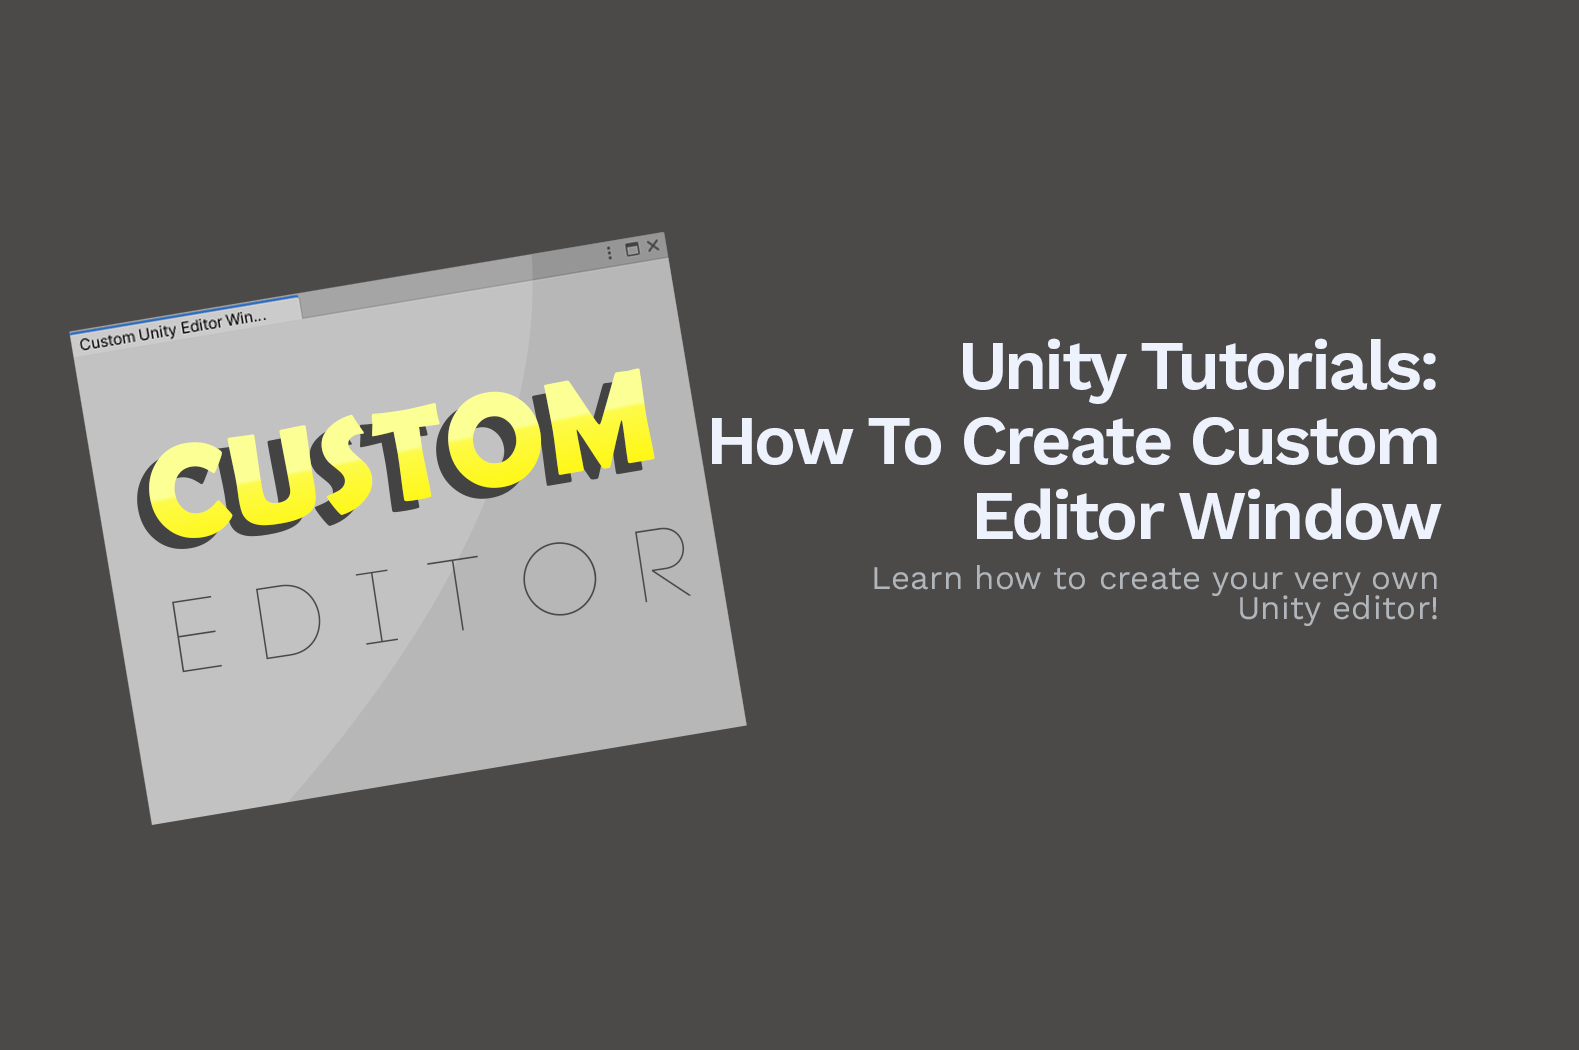 Unity Tutorials: How To Create Custom Editor Window